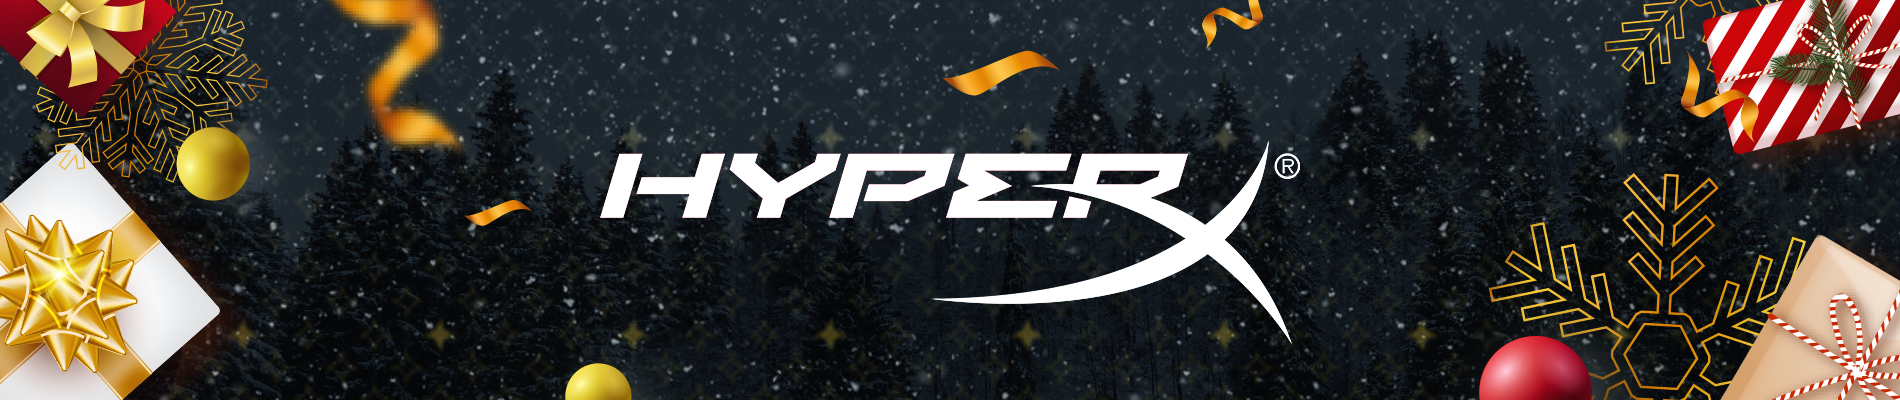 HyperX_web_banner